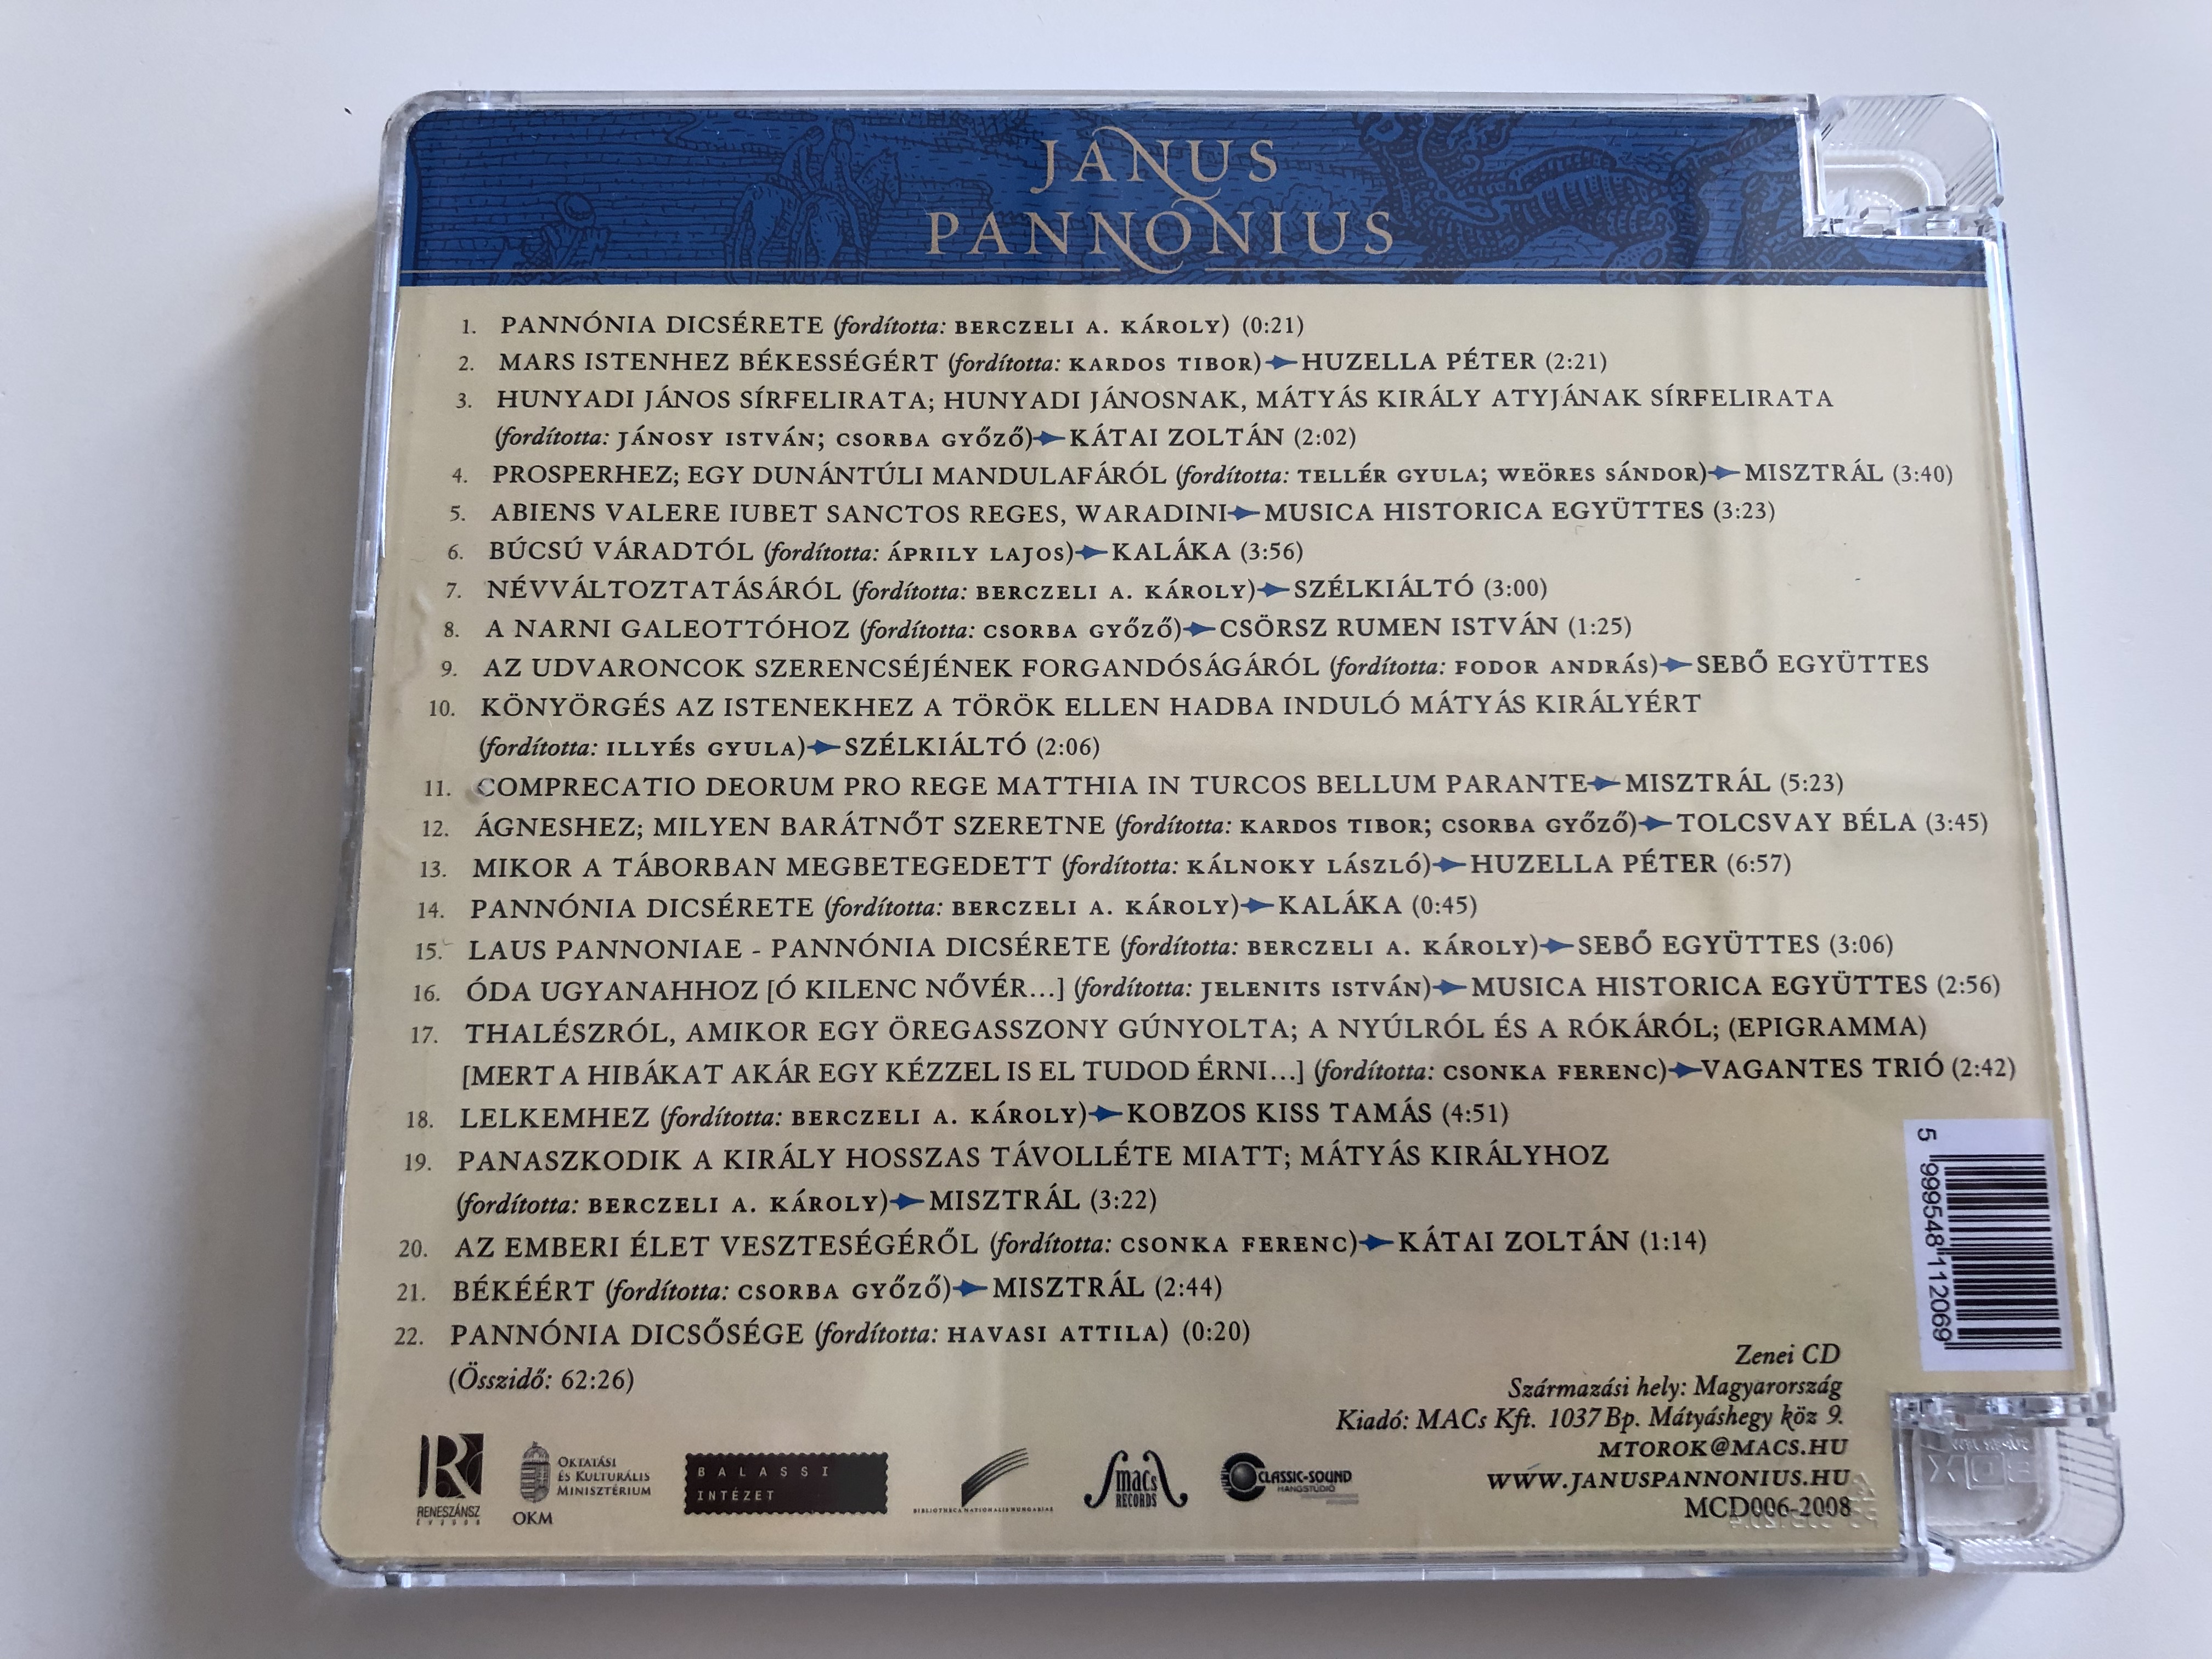 janus-pannonius-huzella-p-ter-k-tai-zolt-n-kobzos-kiss-tam-s-seb-egy-ttes-sz-lki-lt-kal-ka-misztr-l-musica-historica-tolcsvay-b-la-vagantes-tri-macs-records-audio-cd-2008-mcd006-9-.jpg